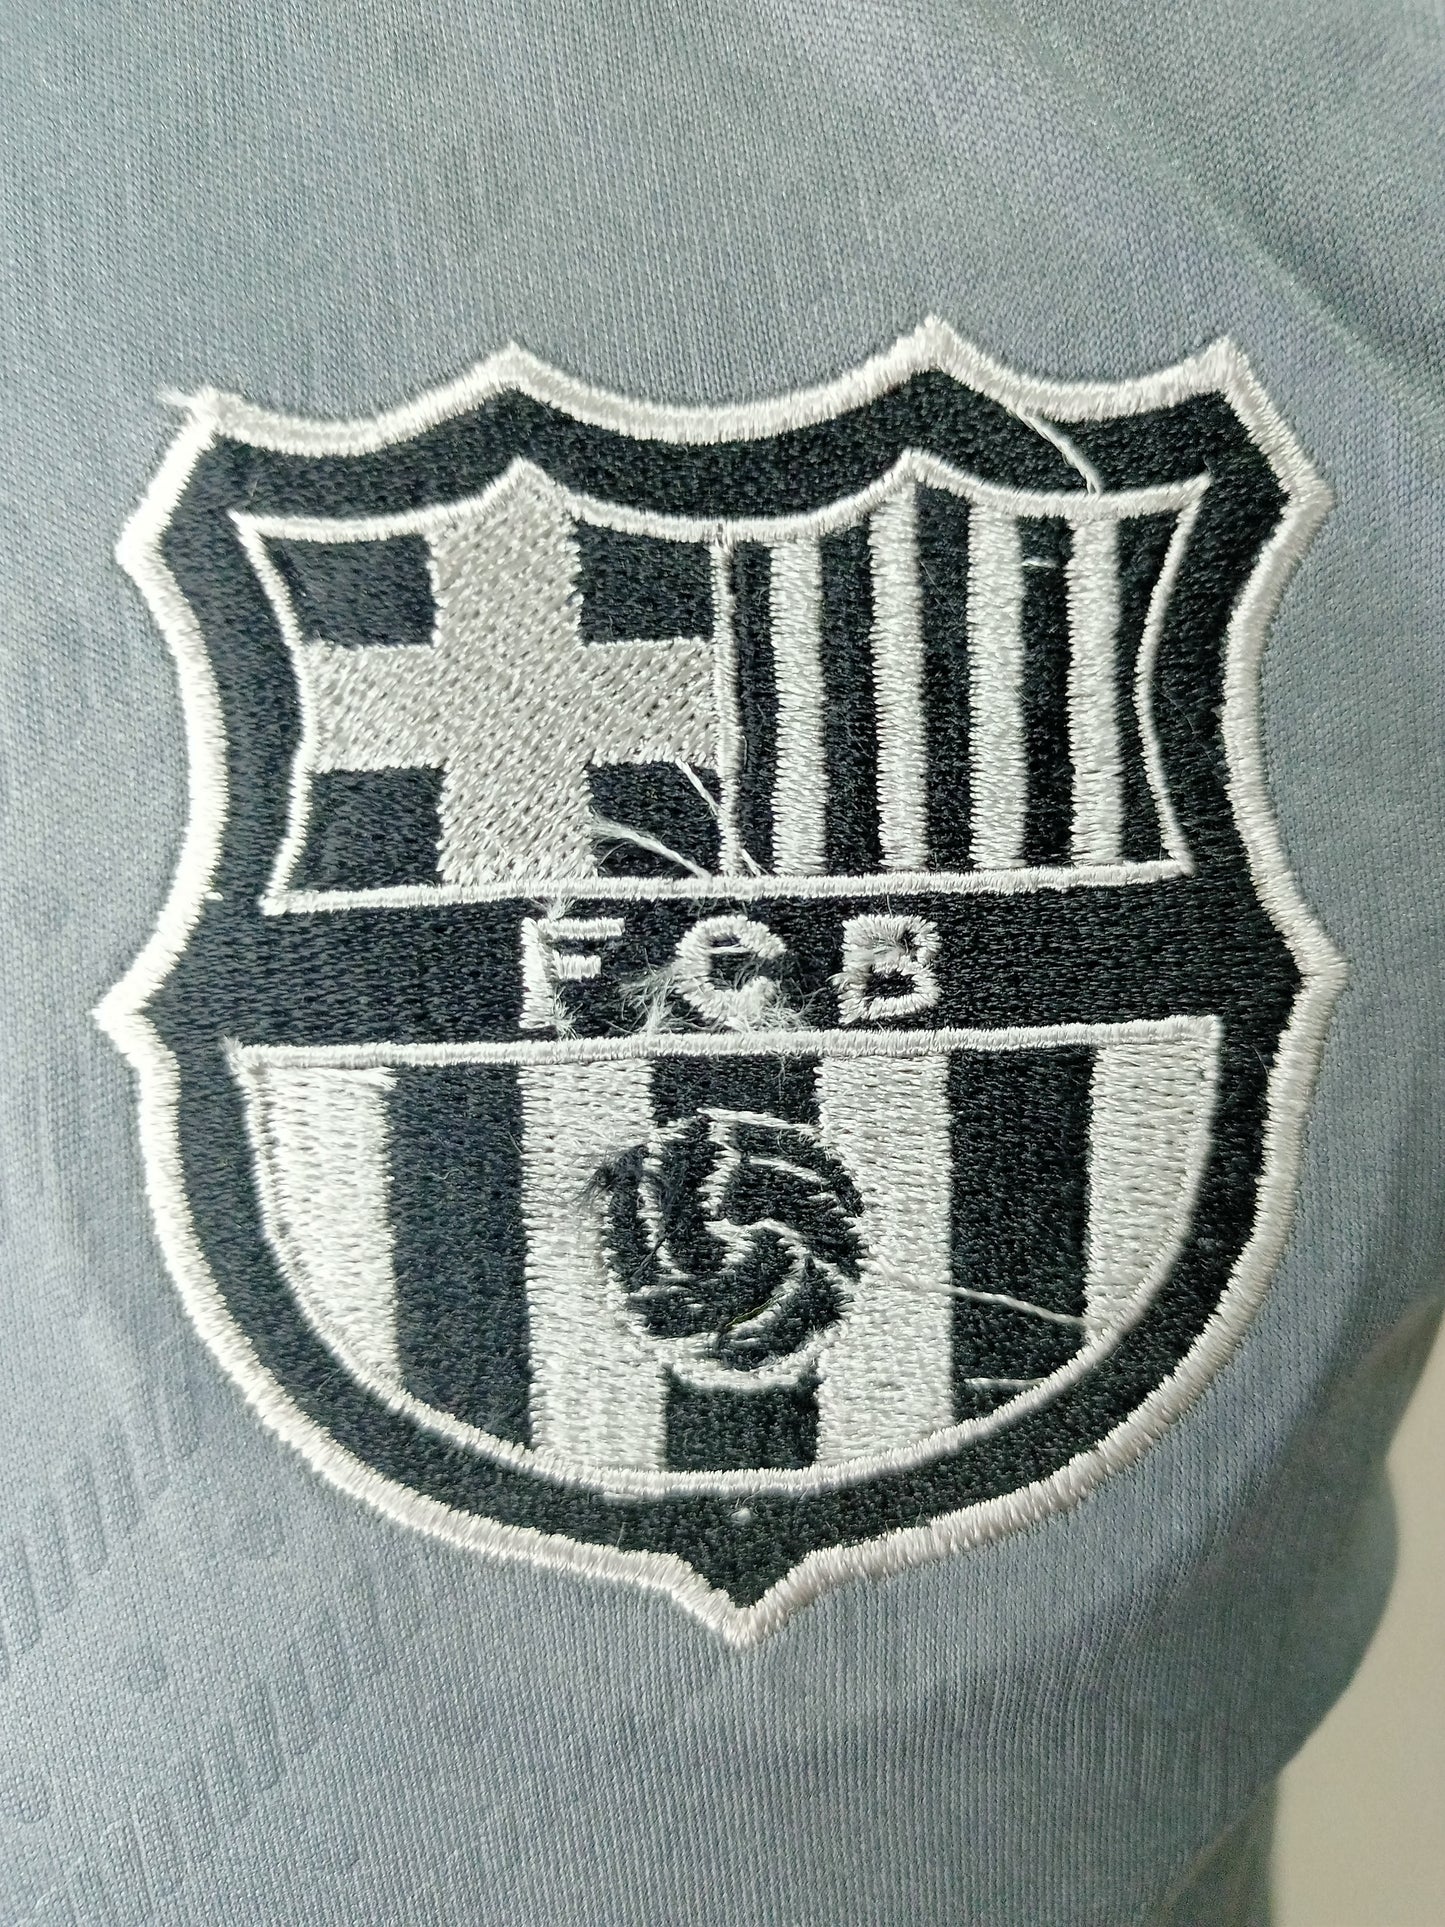 Barcelona Shirt Sleeveless Top